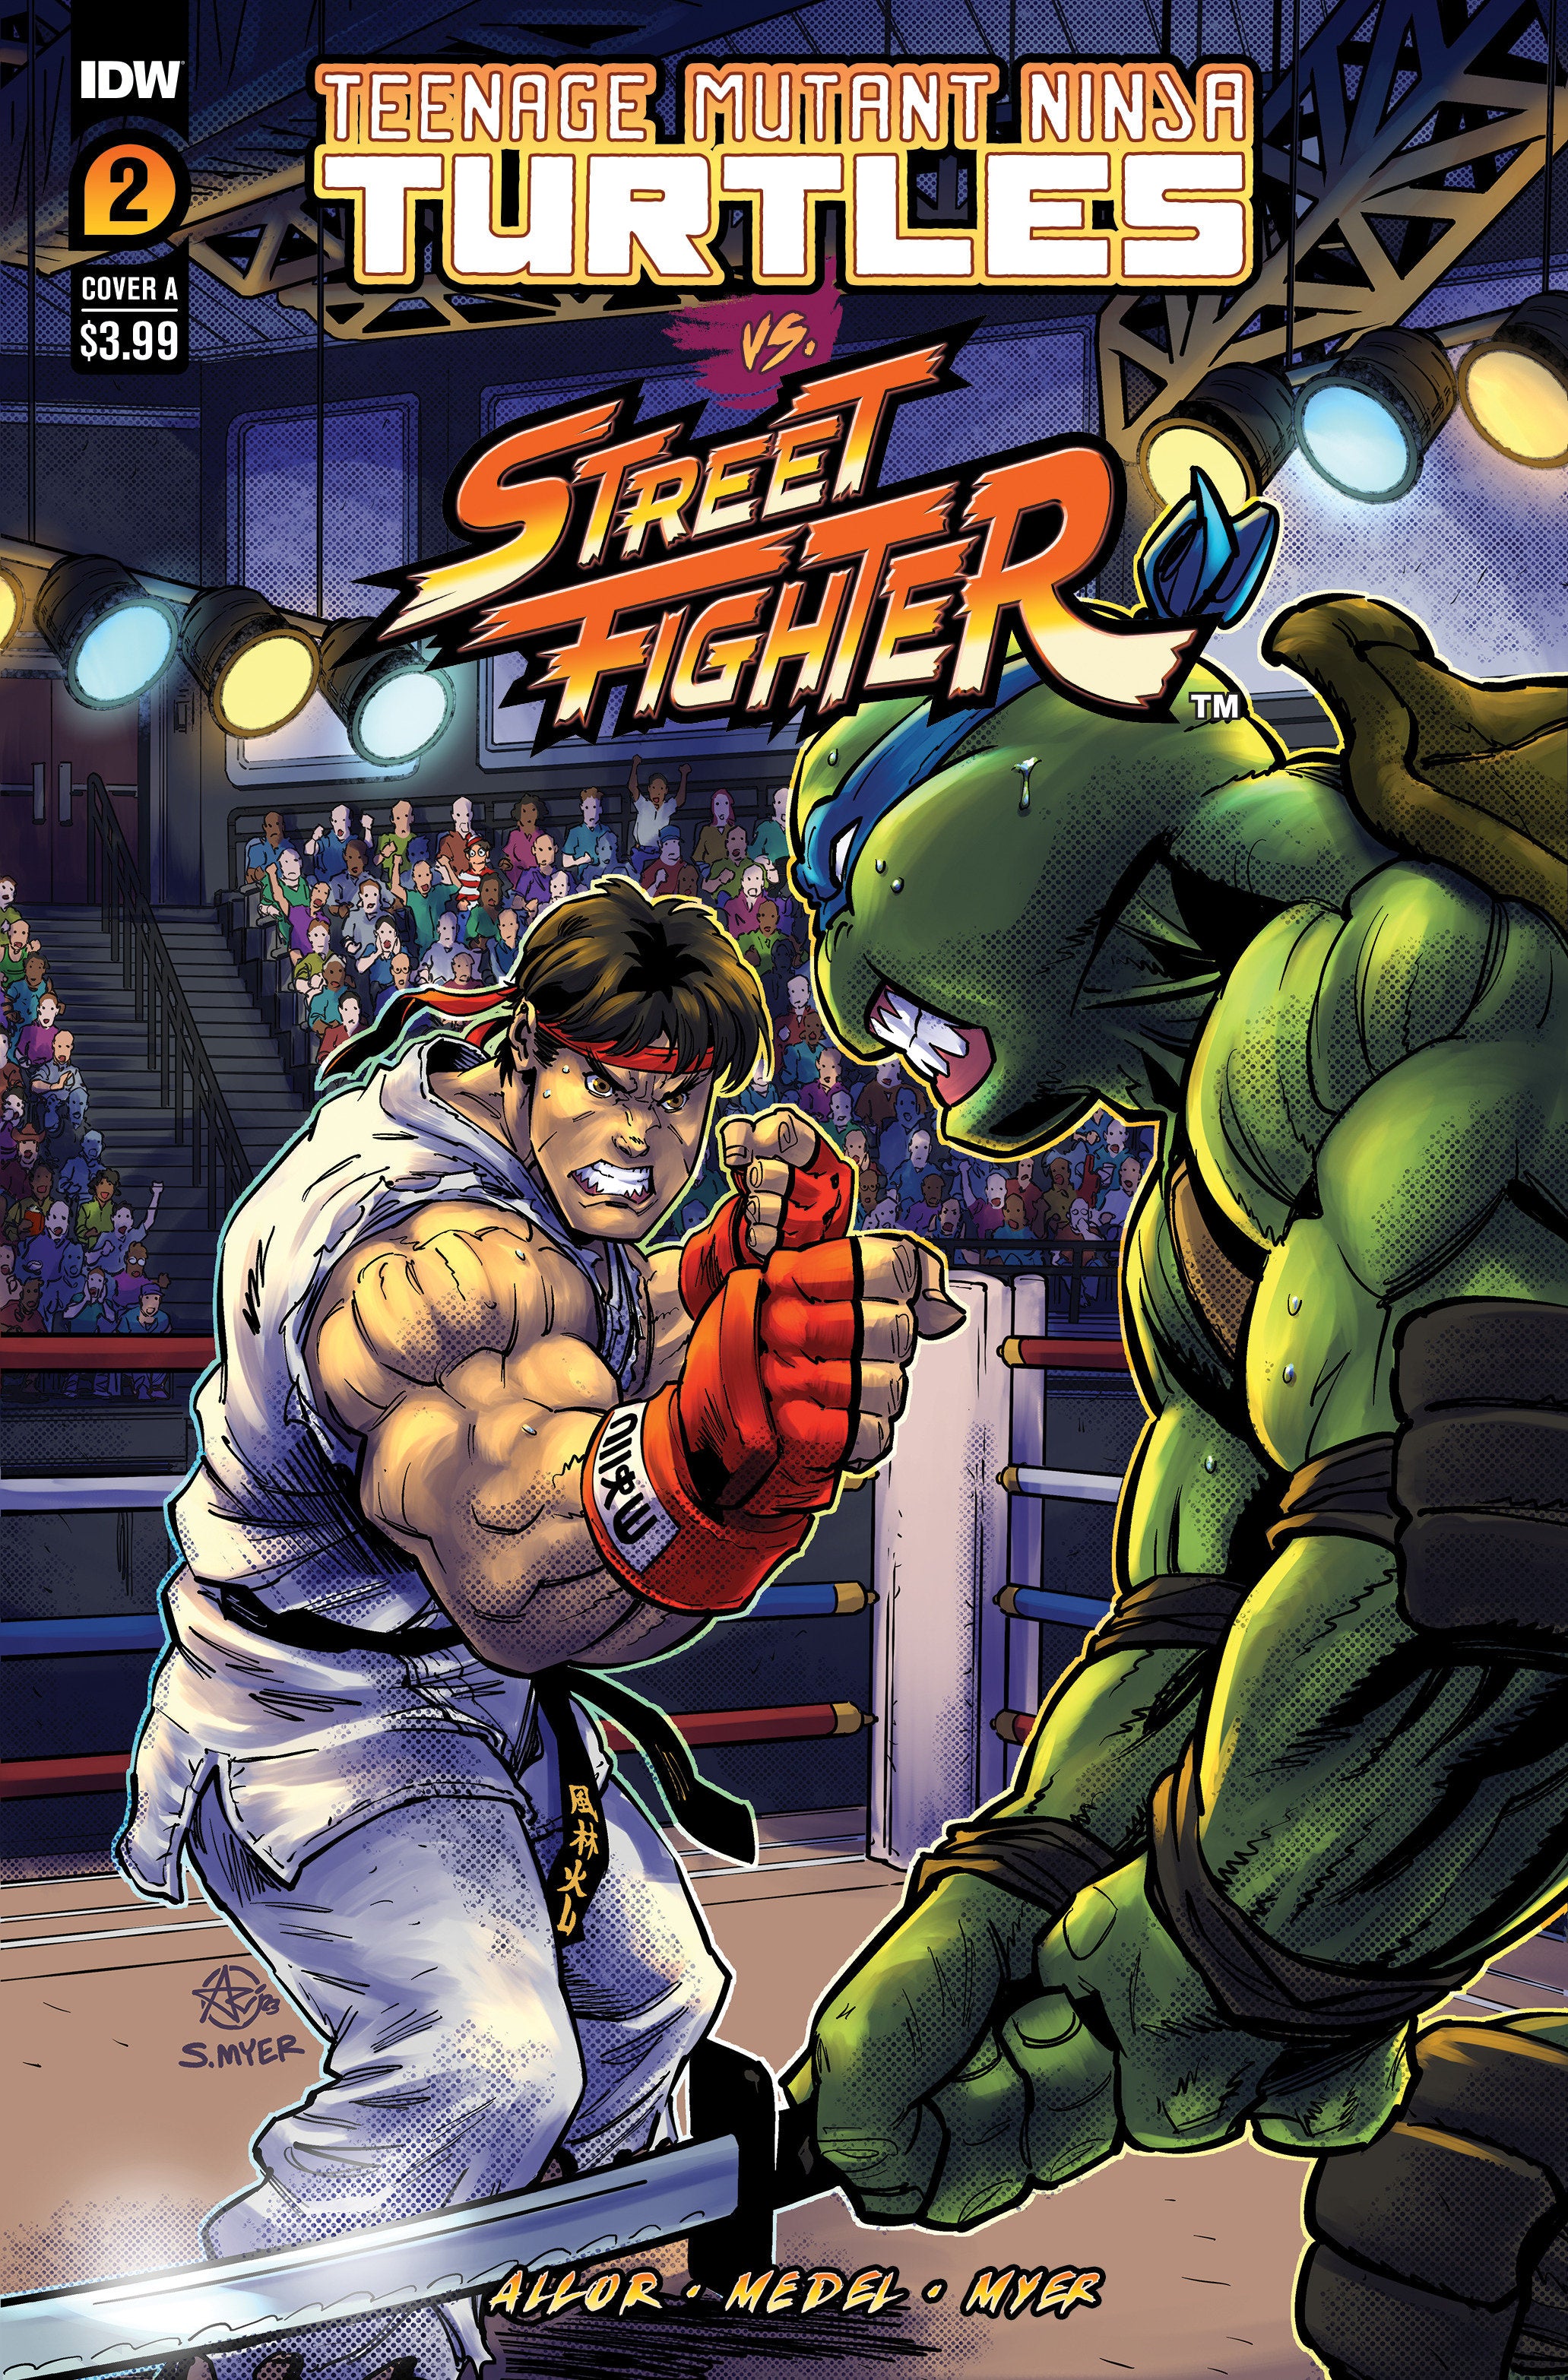 Teenage Mutant Ninja Turtles vs. Street Fighter #2 Cover A (Medel)